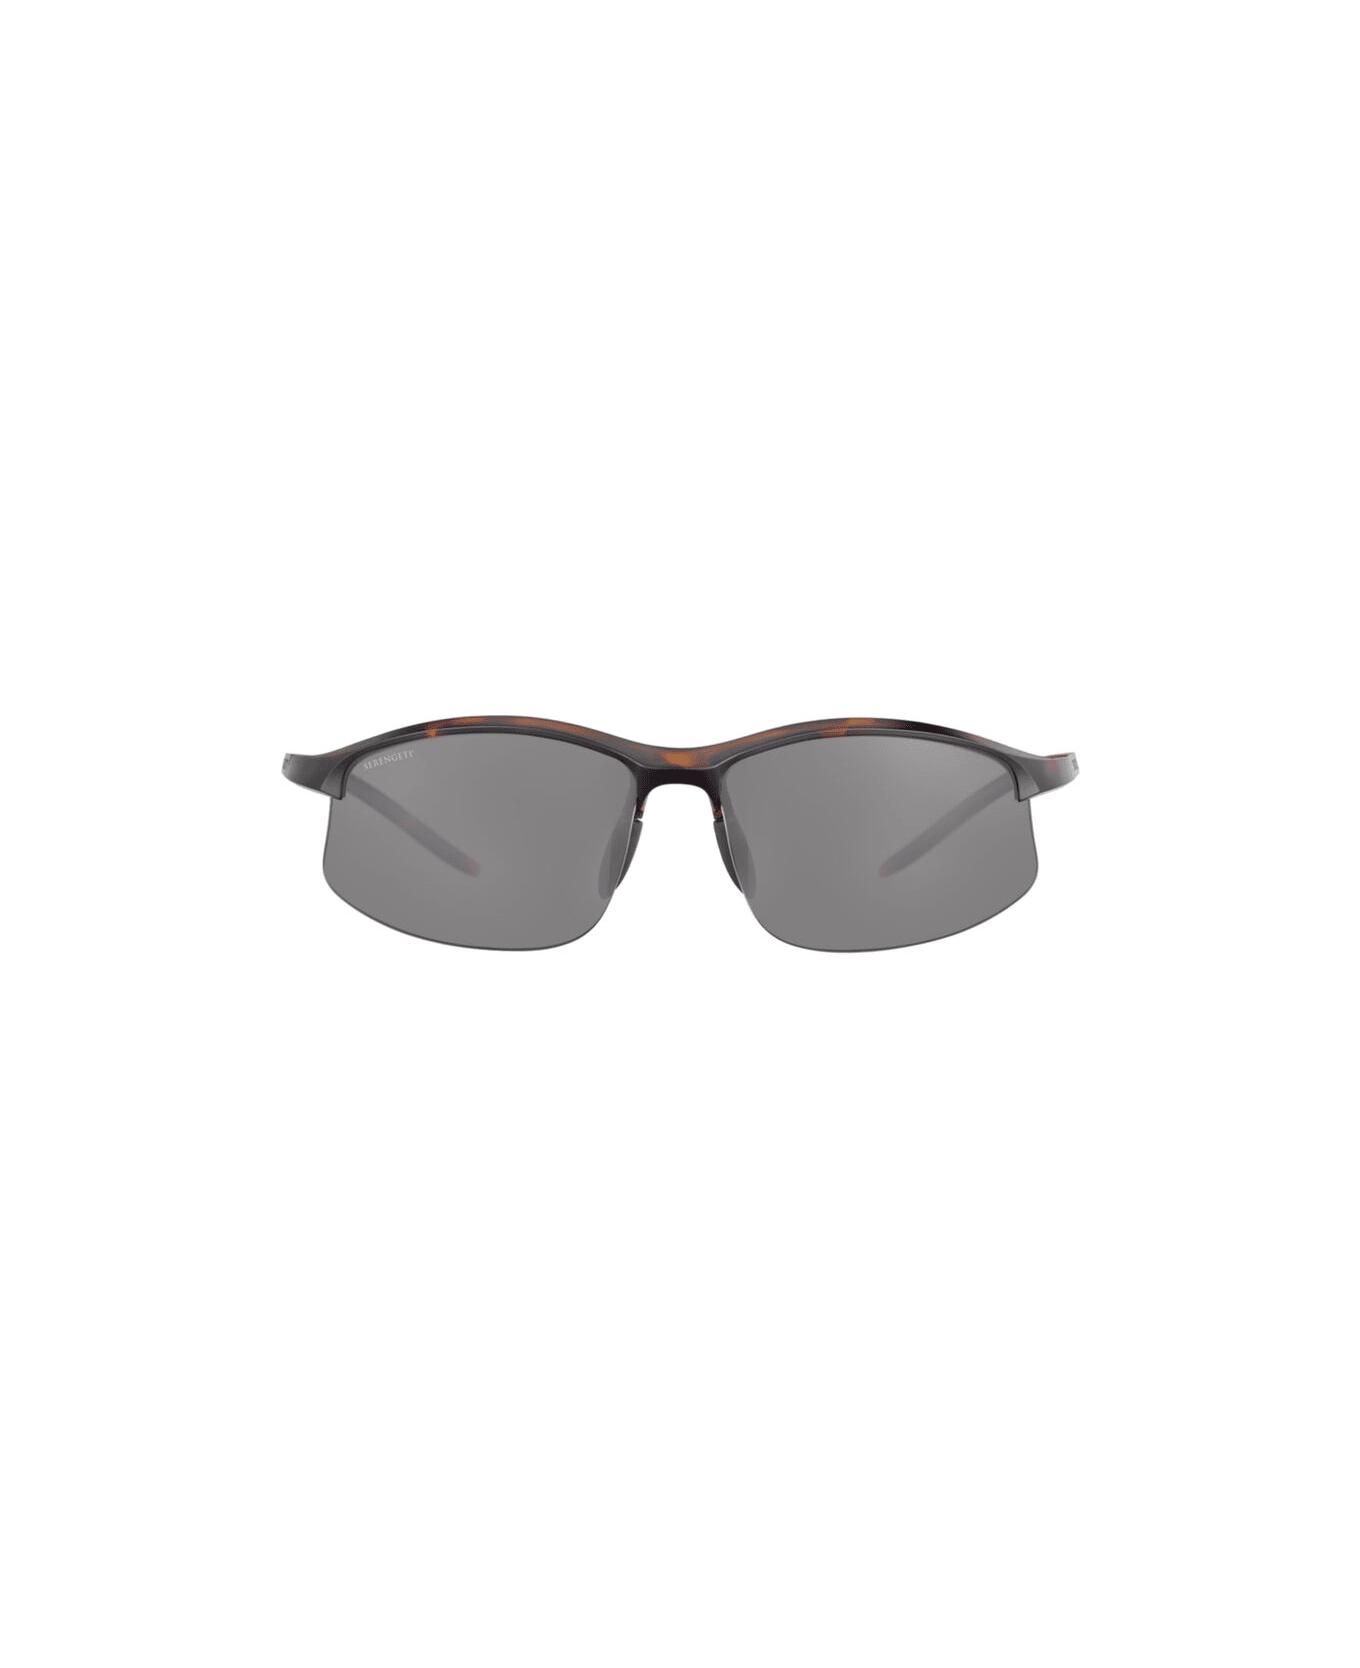 Serengeti Eyewear Winslow 551003 Sunglasses - Marrone lente grigia サングラス